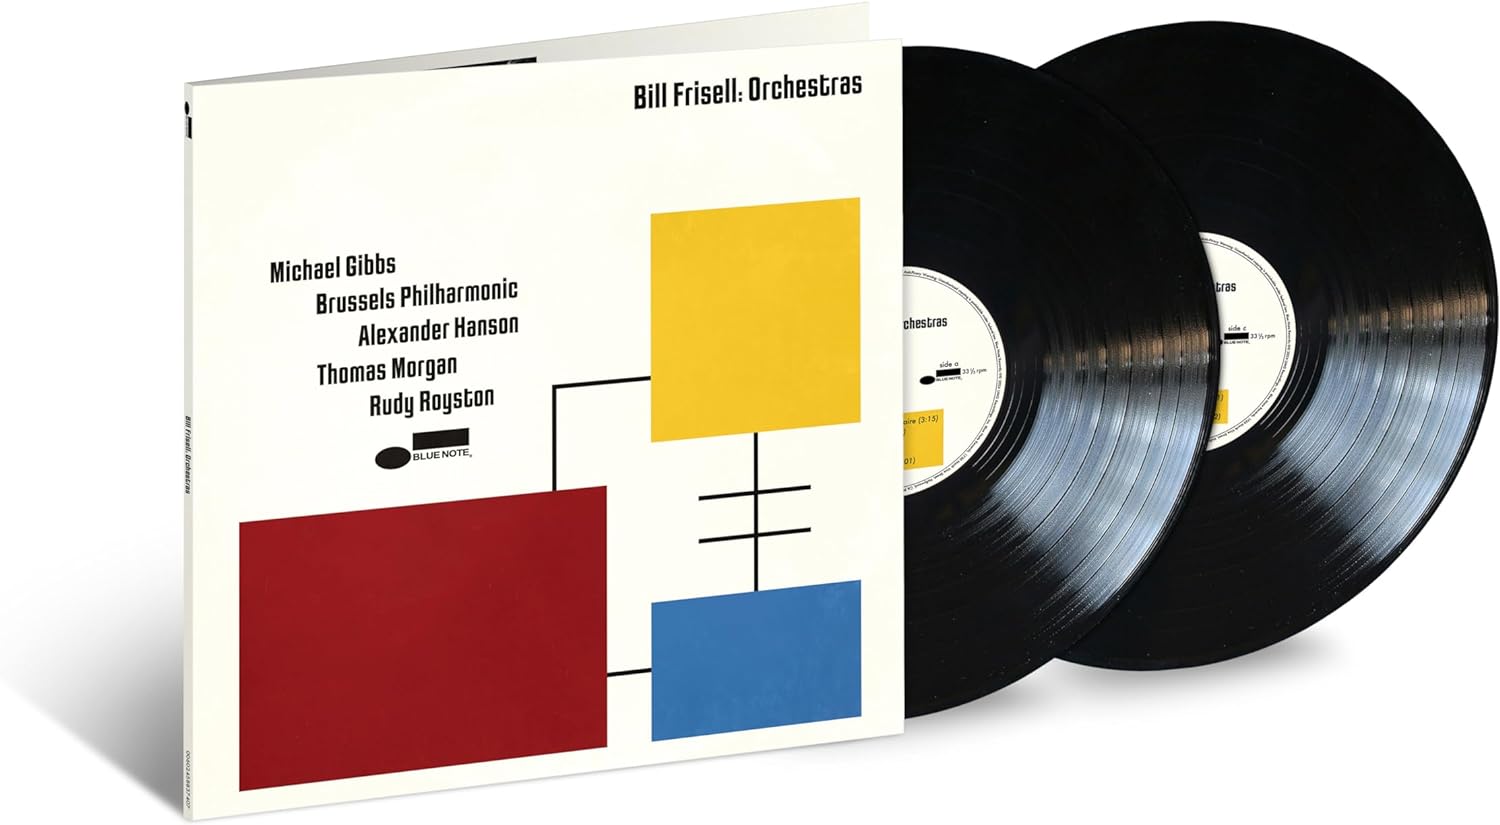 Bill Frisell / Orchestras